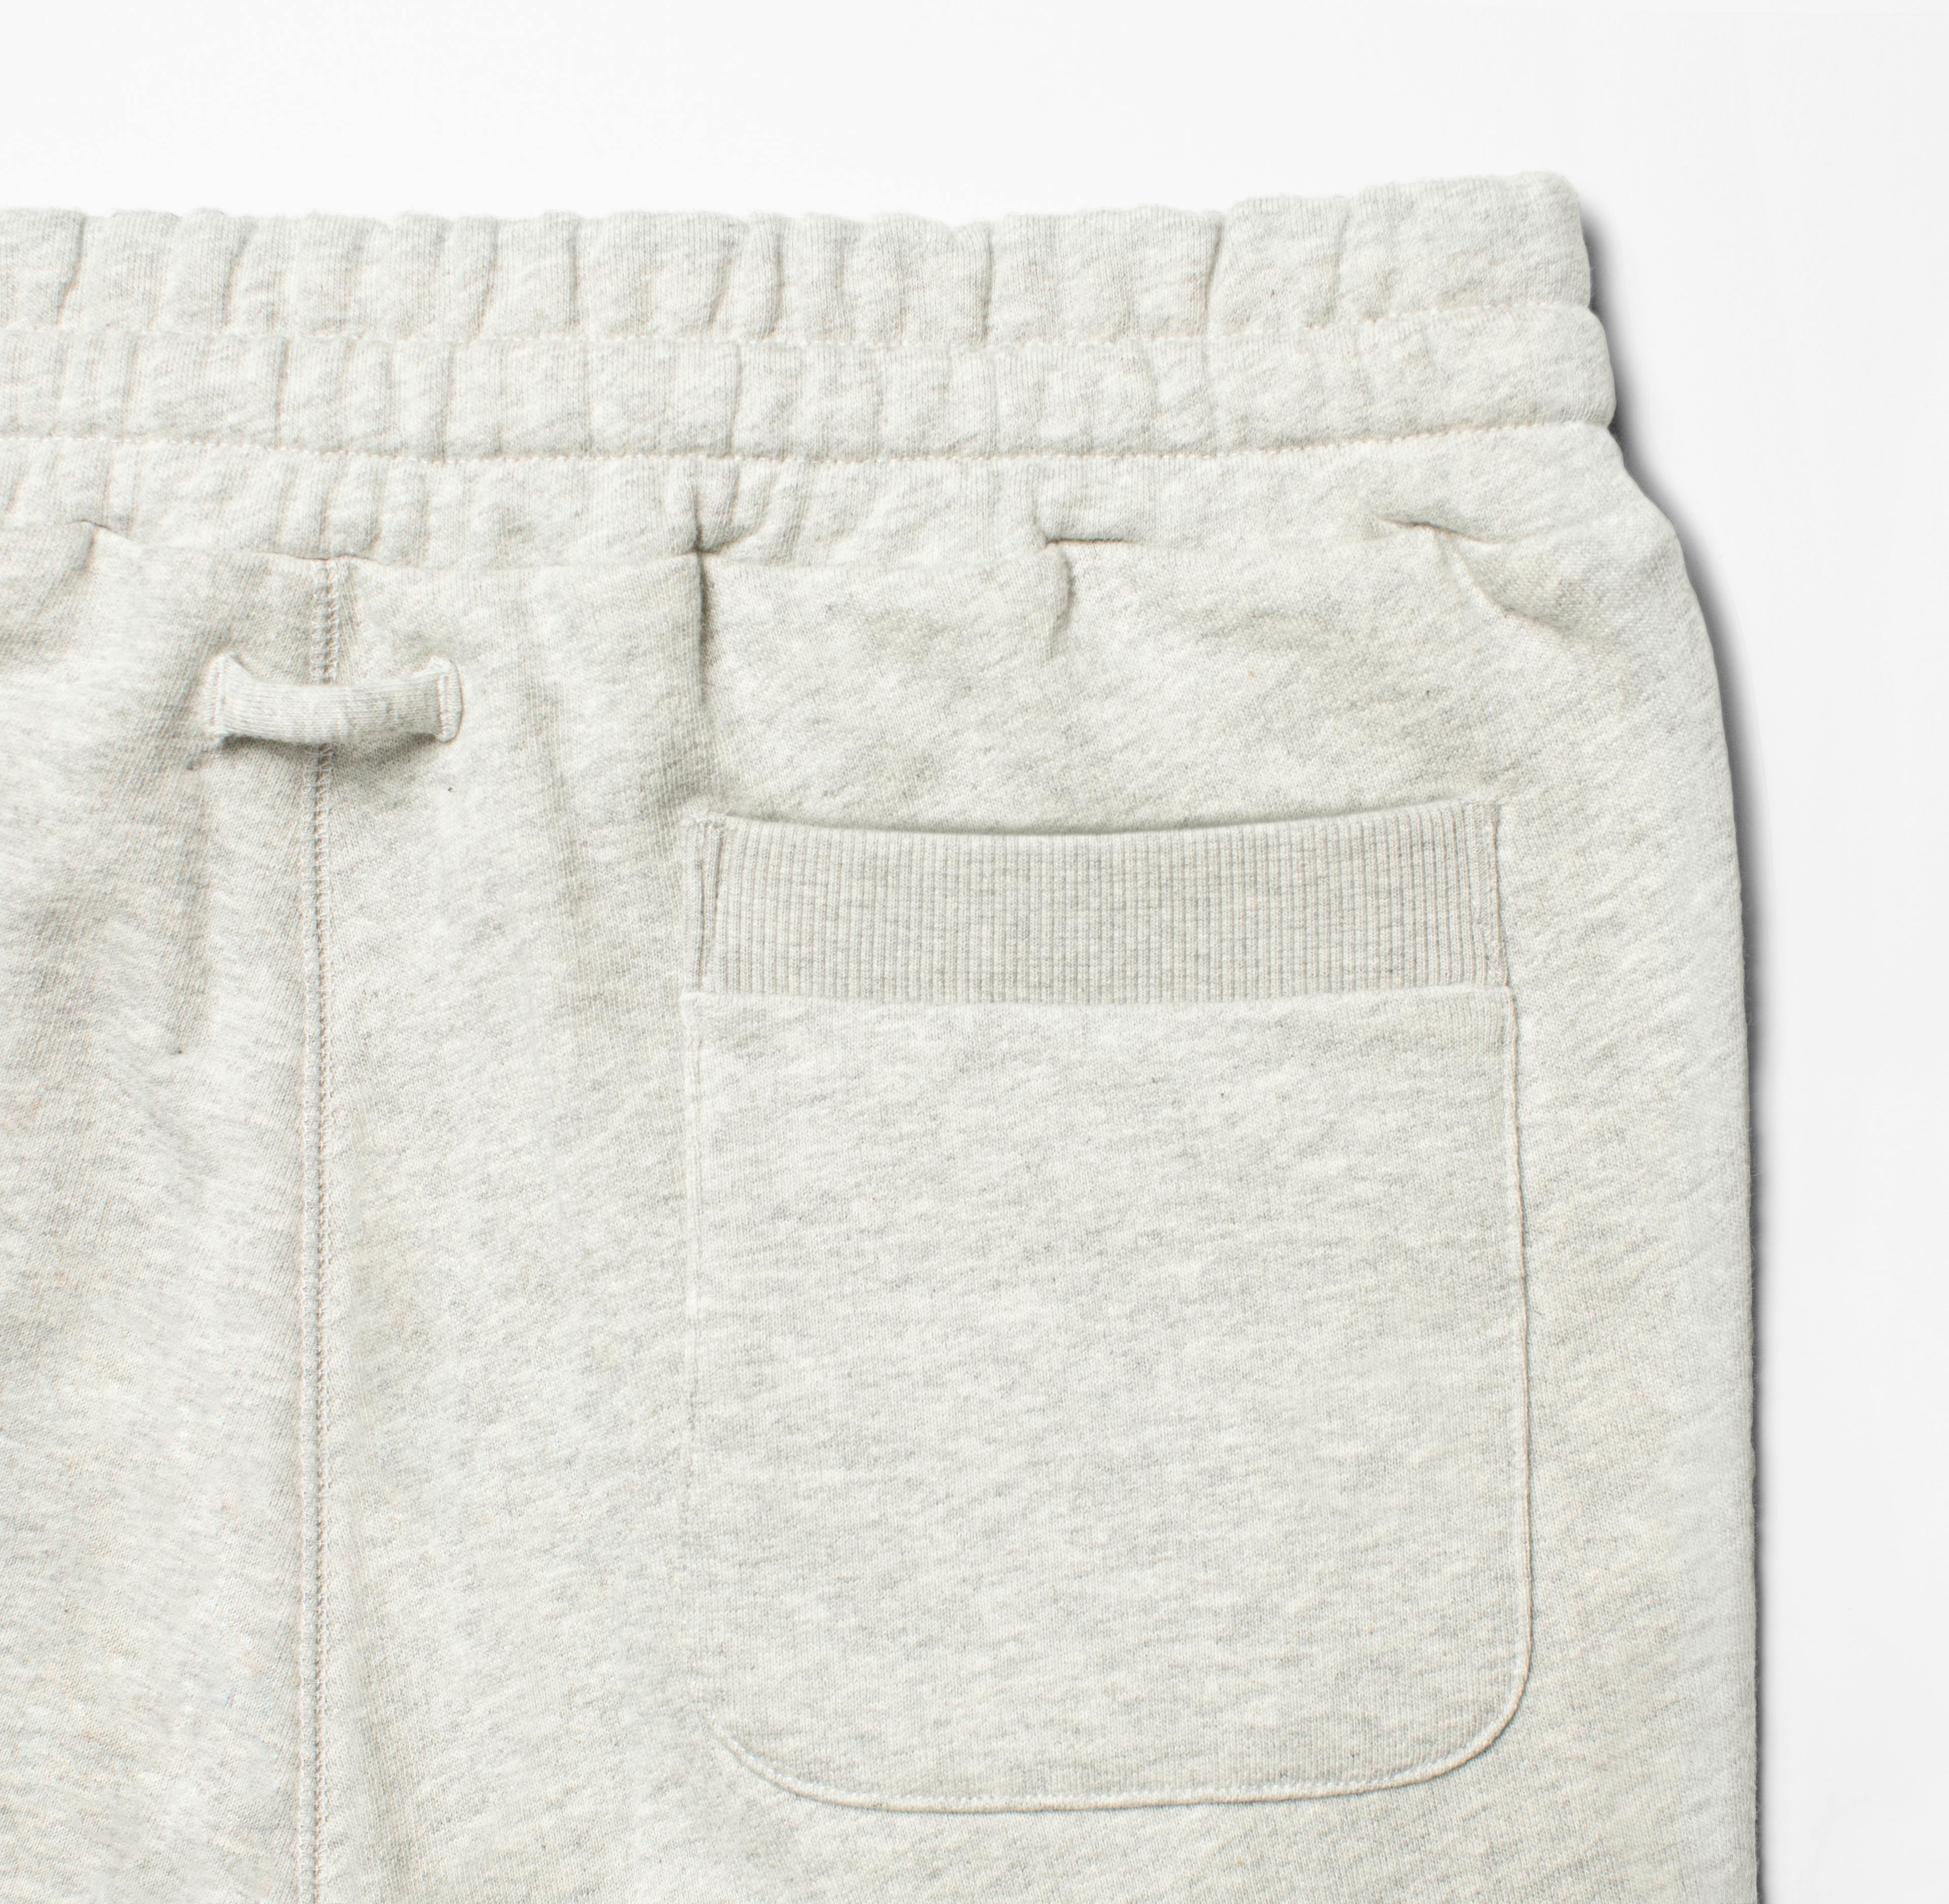 Lounge & Leisure Sweatpants (Men's Fit / Oatmeal) - Back Pocket Detail 